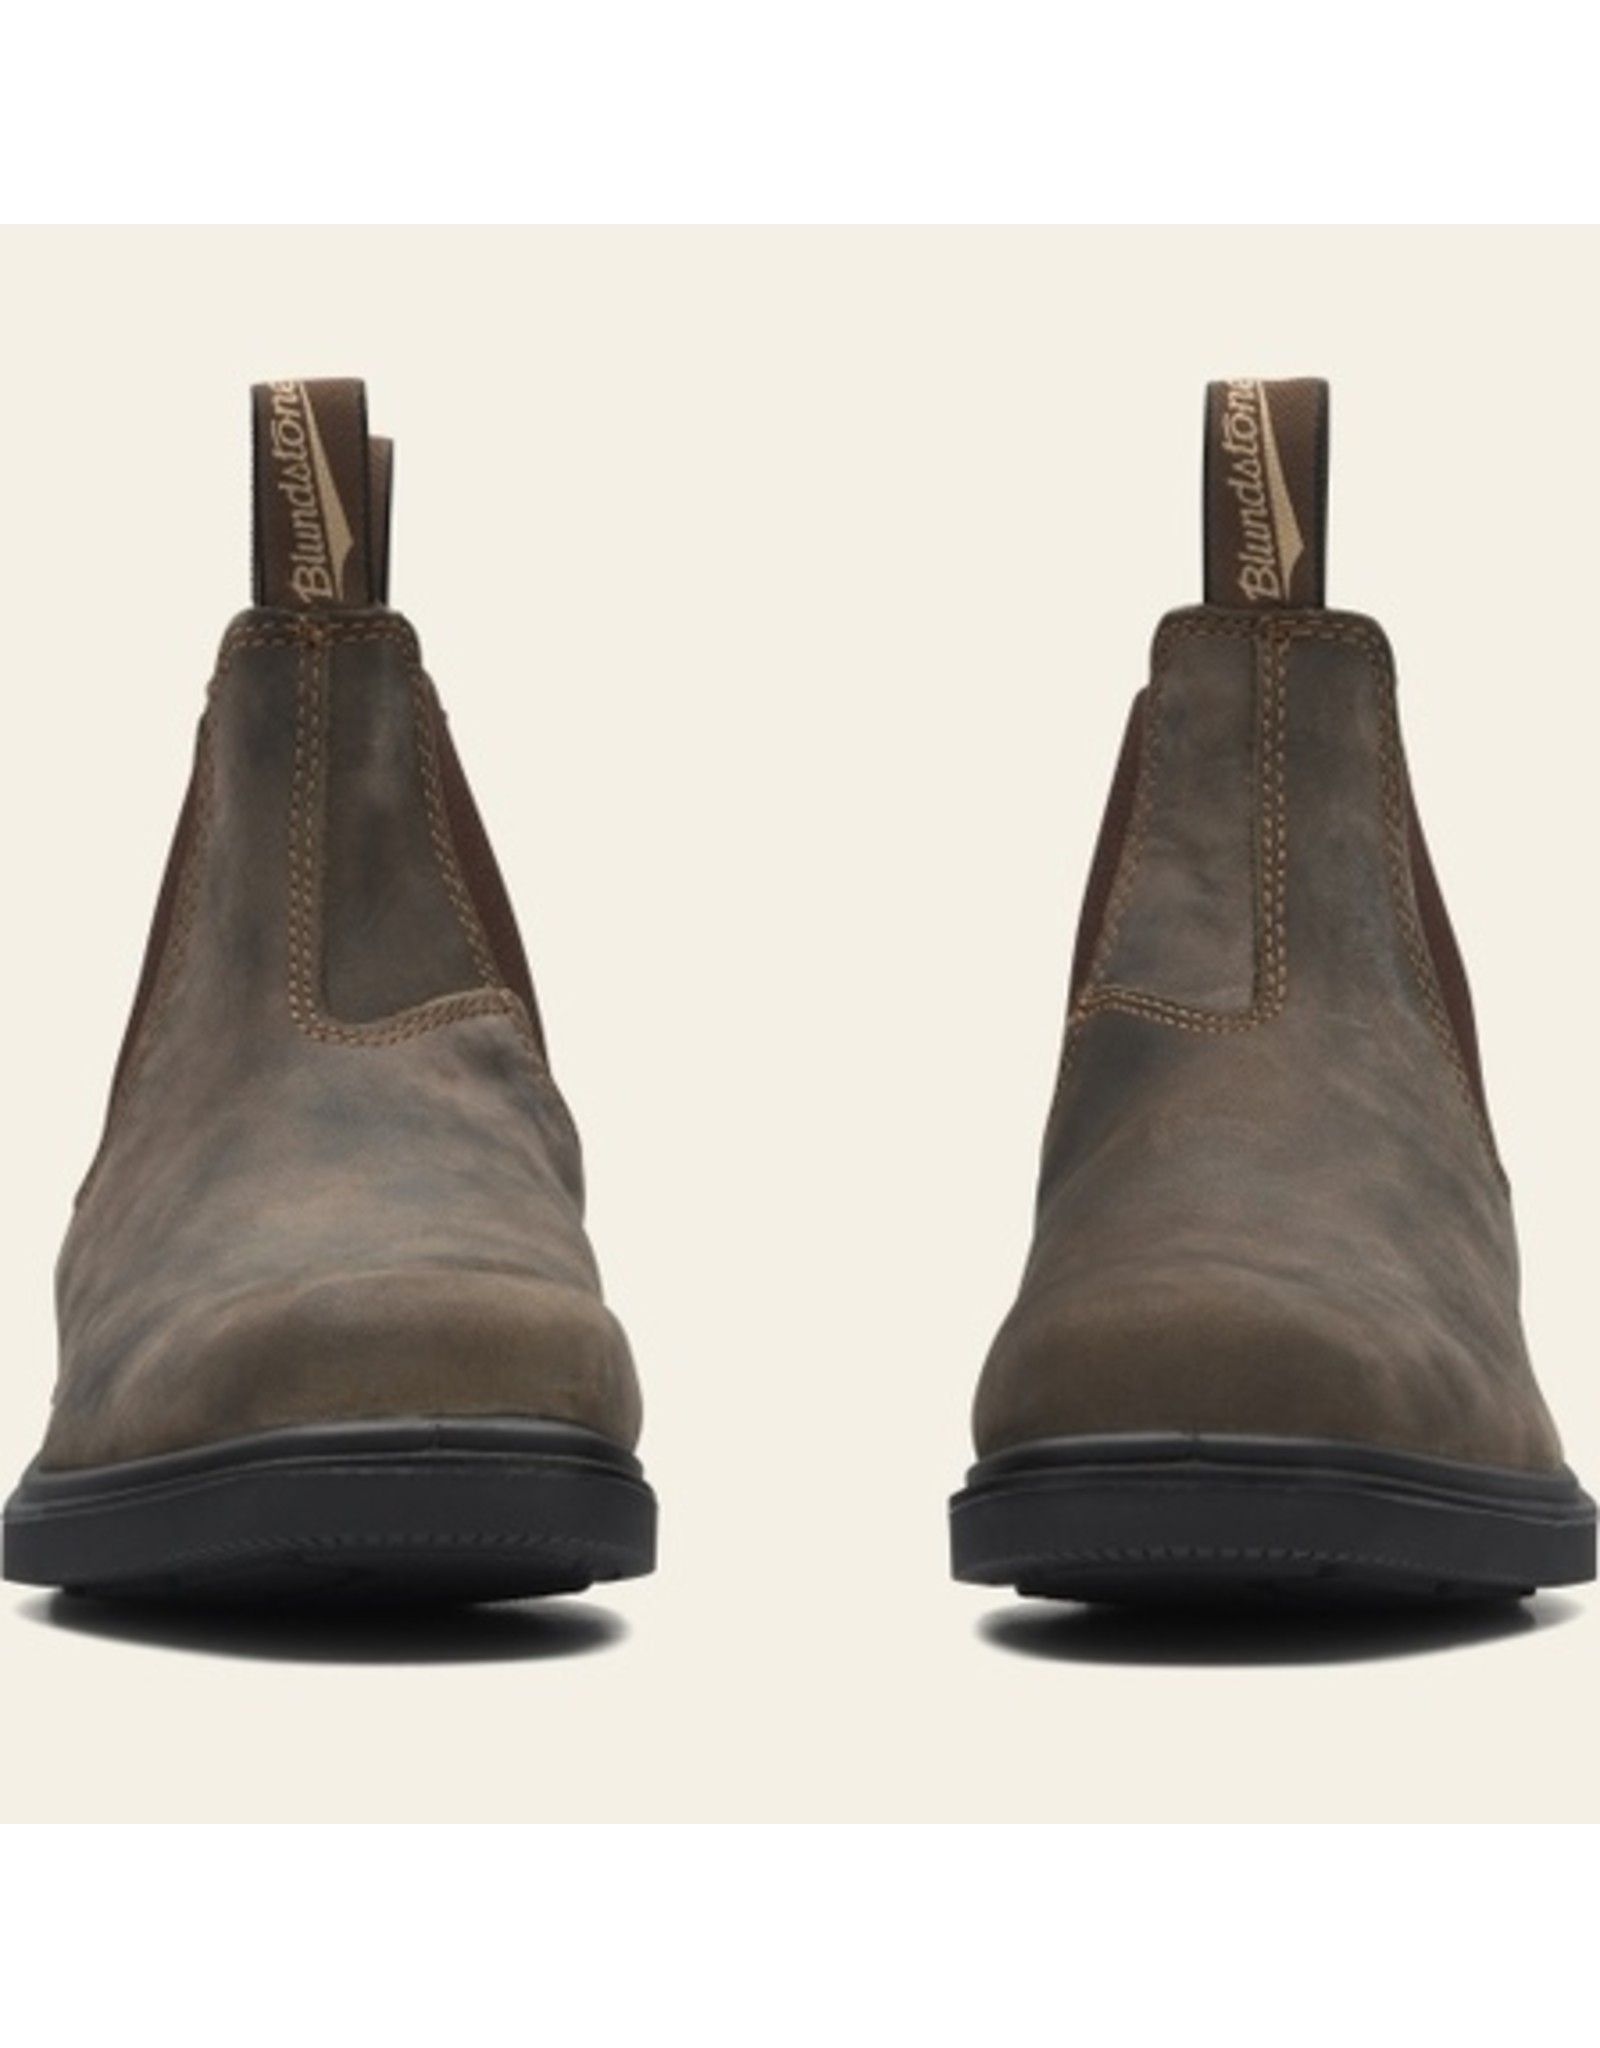 DRESS CHELSEA BOOT #1306-RUSTIC BROWN - Bend Shoe Co